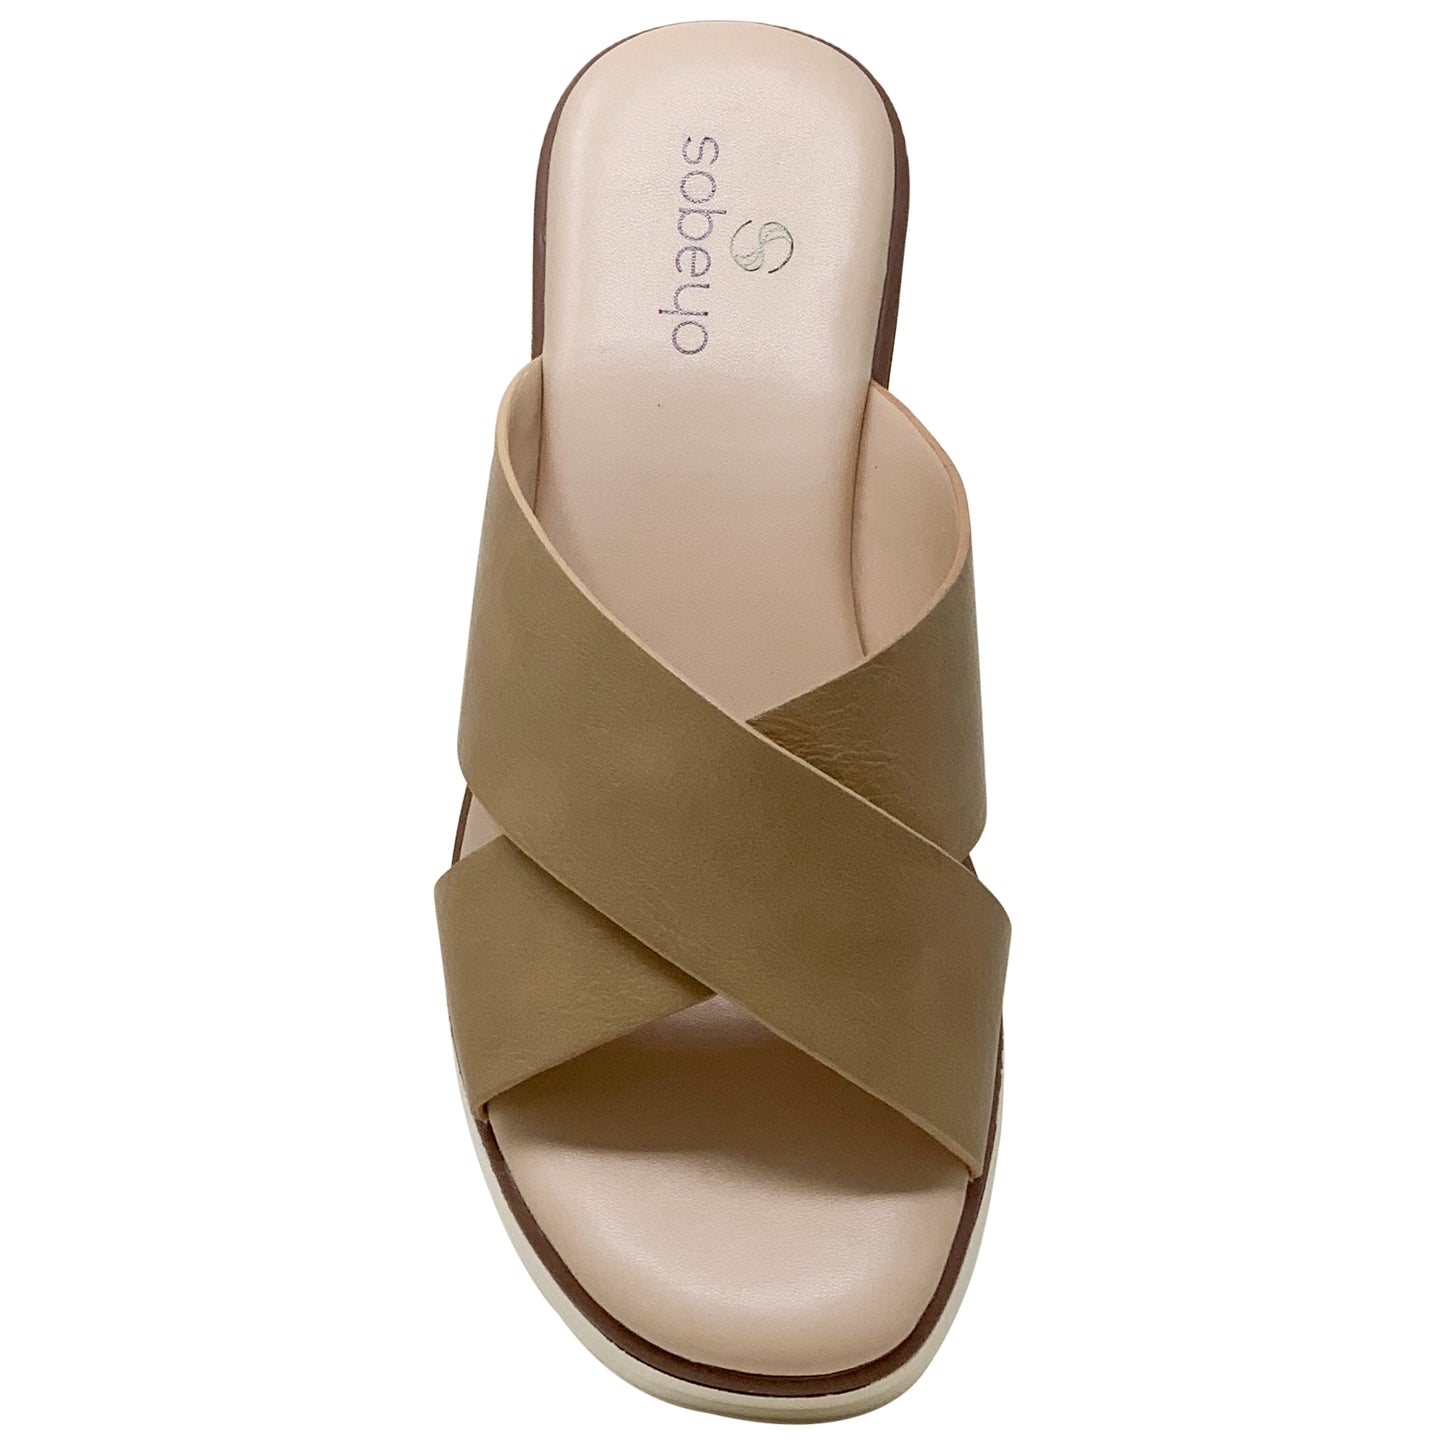 SOBEYO Criss Cross Platform Sandals Cushioned  Striped Sole Tan